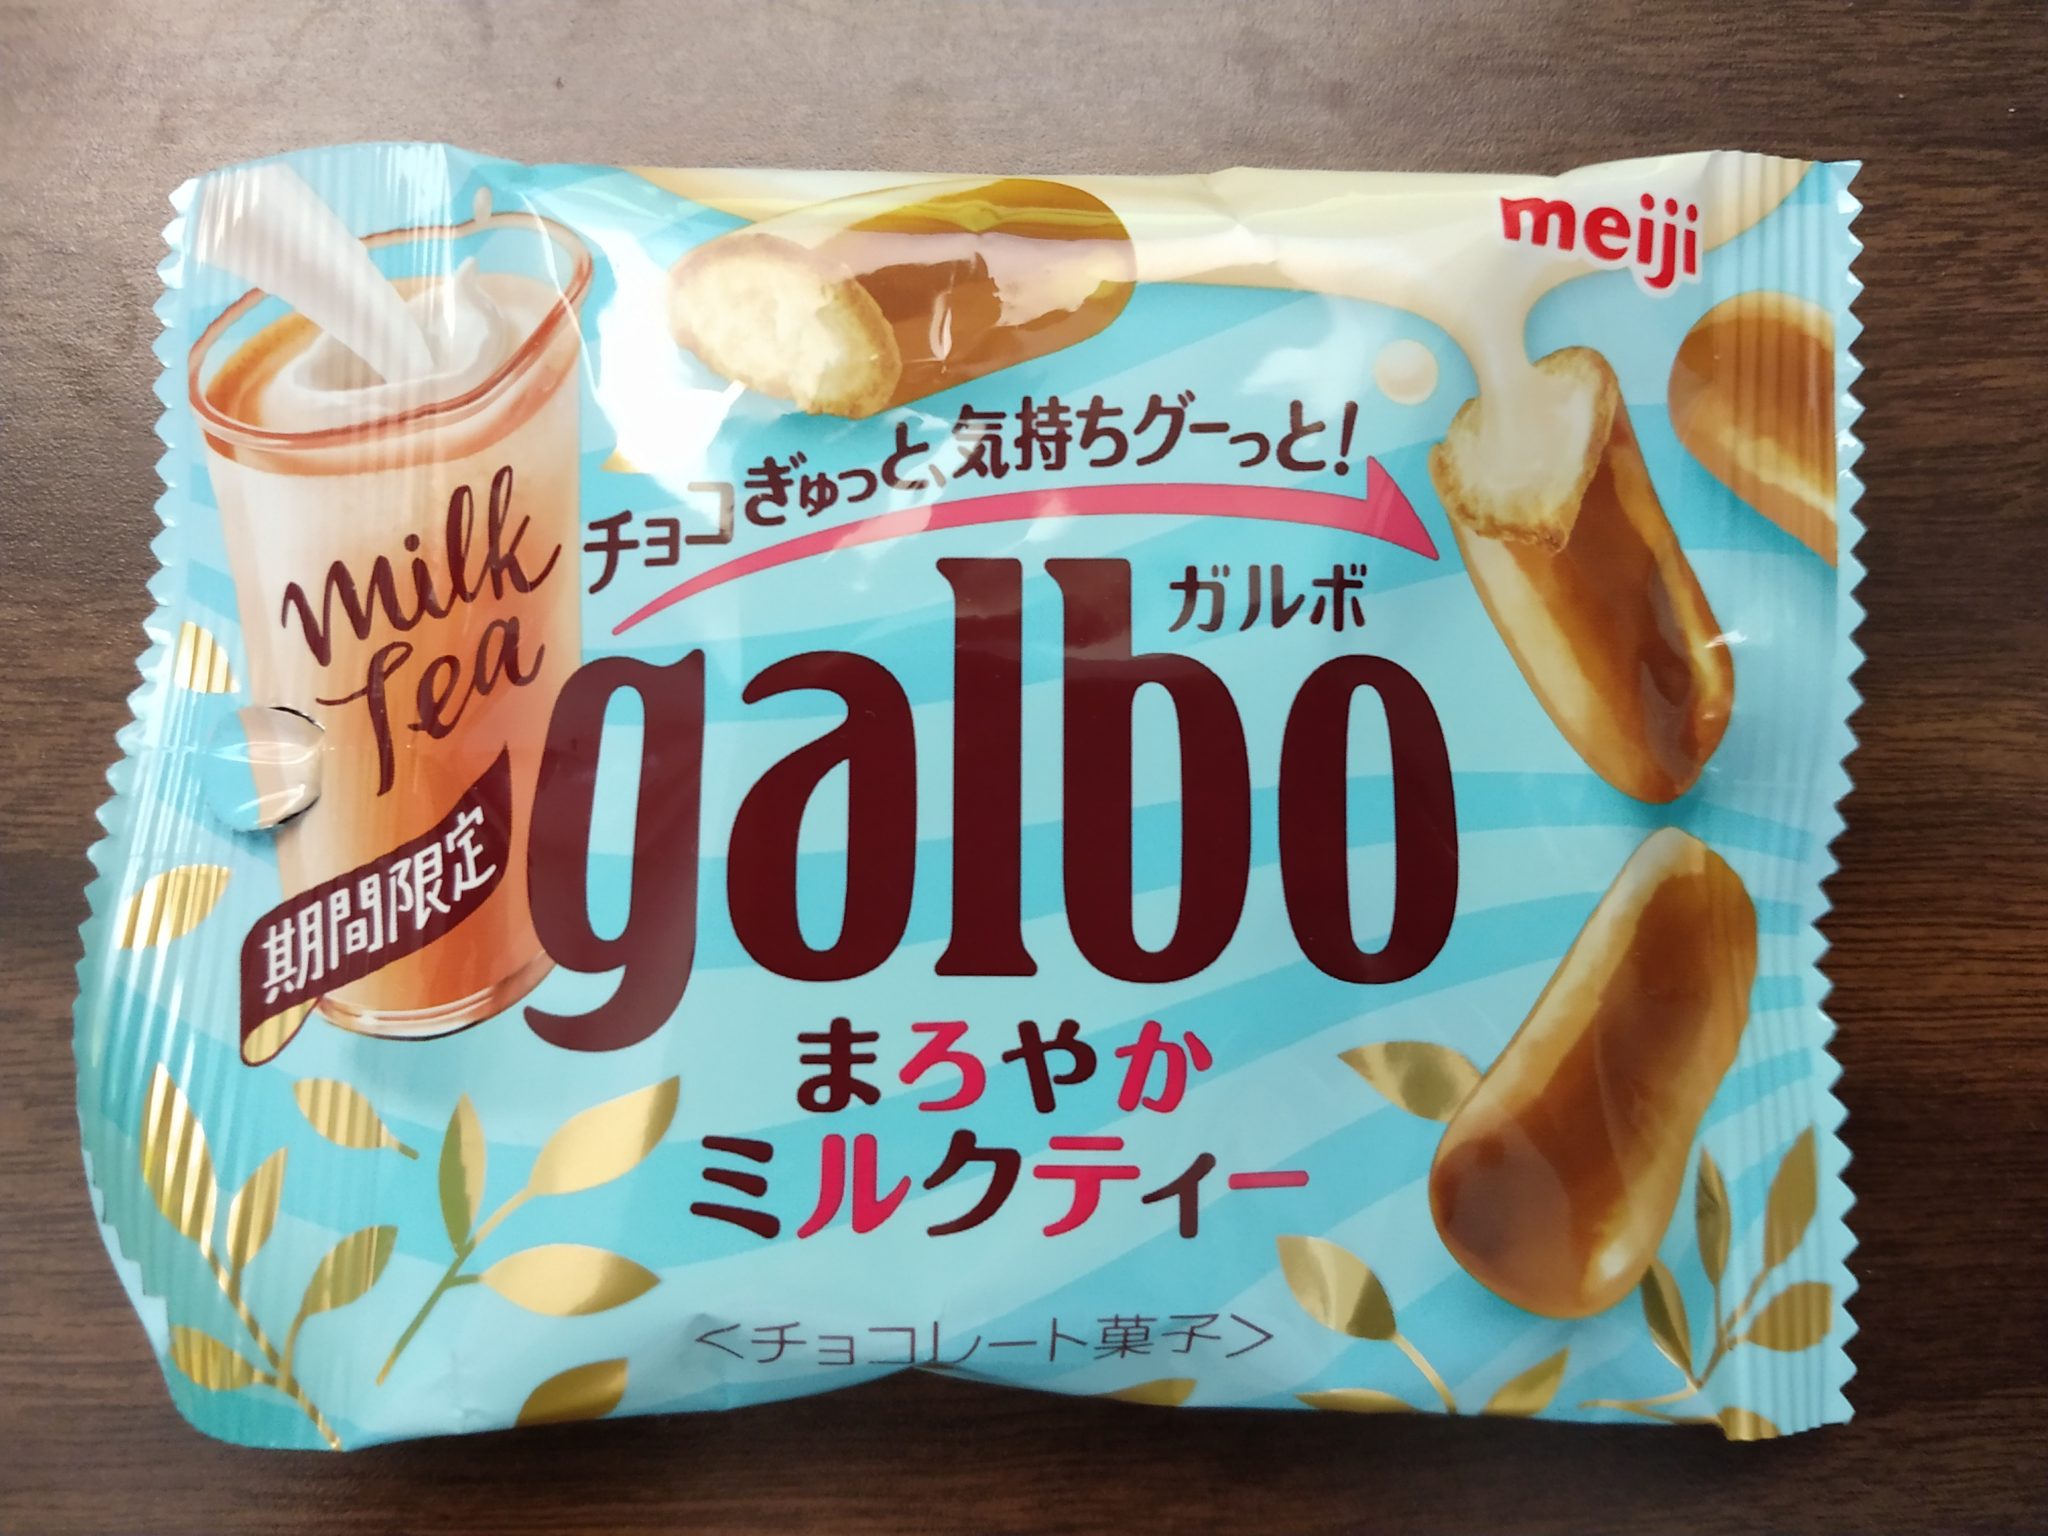 Galbo Chocolate Mini – Milk Tea